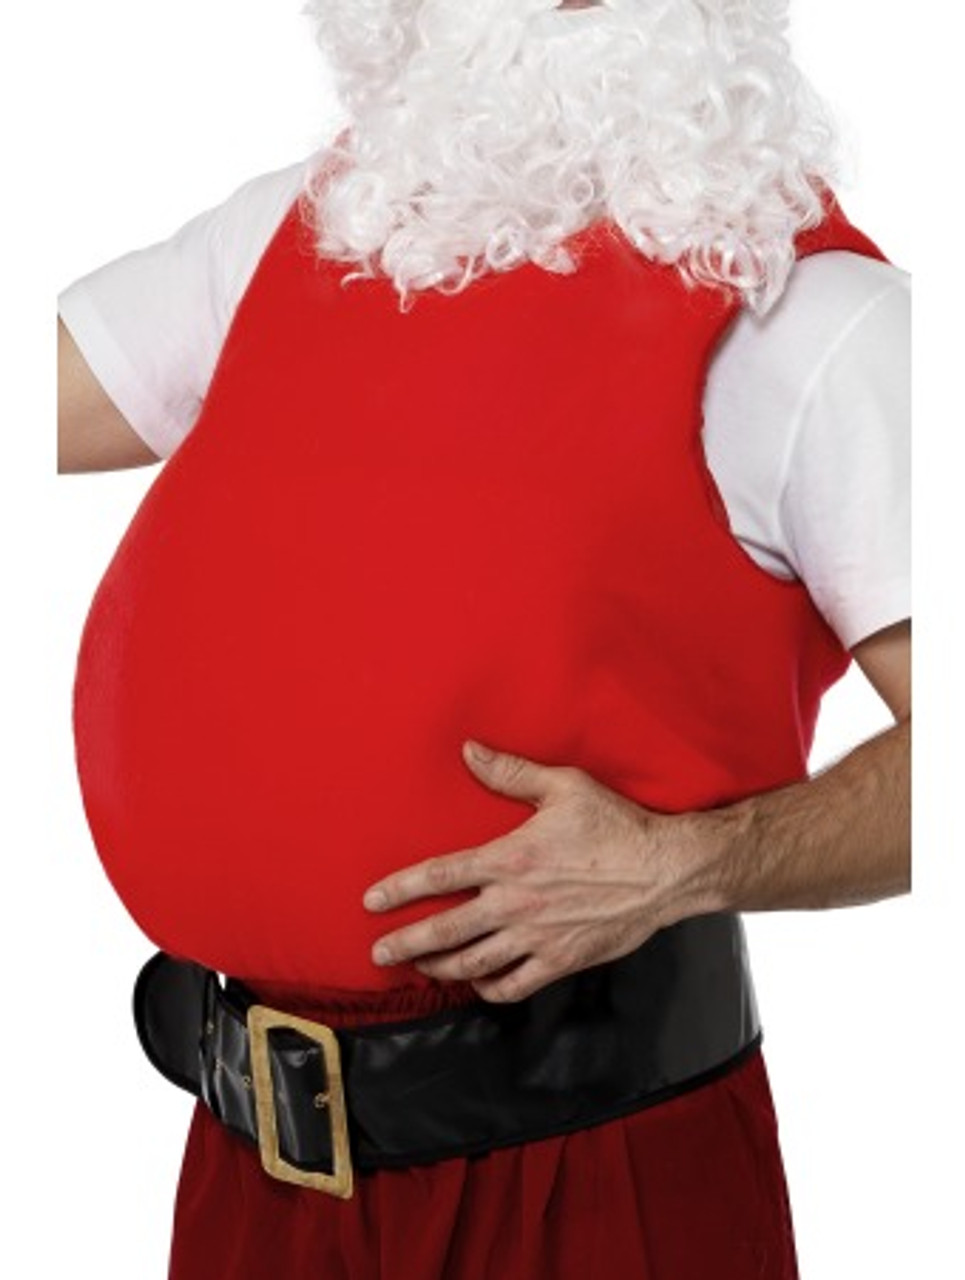 Funny Novelty SANTA CHIMNEY KNEE HIGH SOCKS Holiday Christmas Costume Accessory 